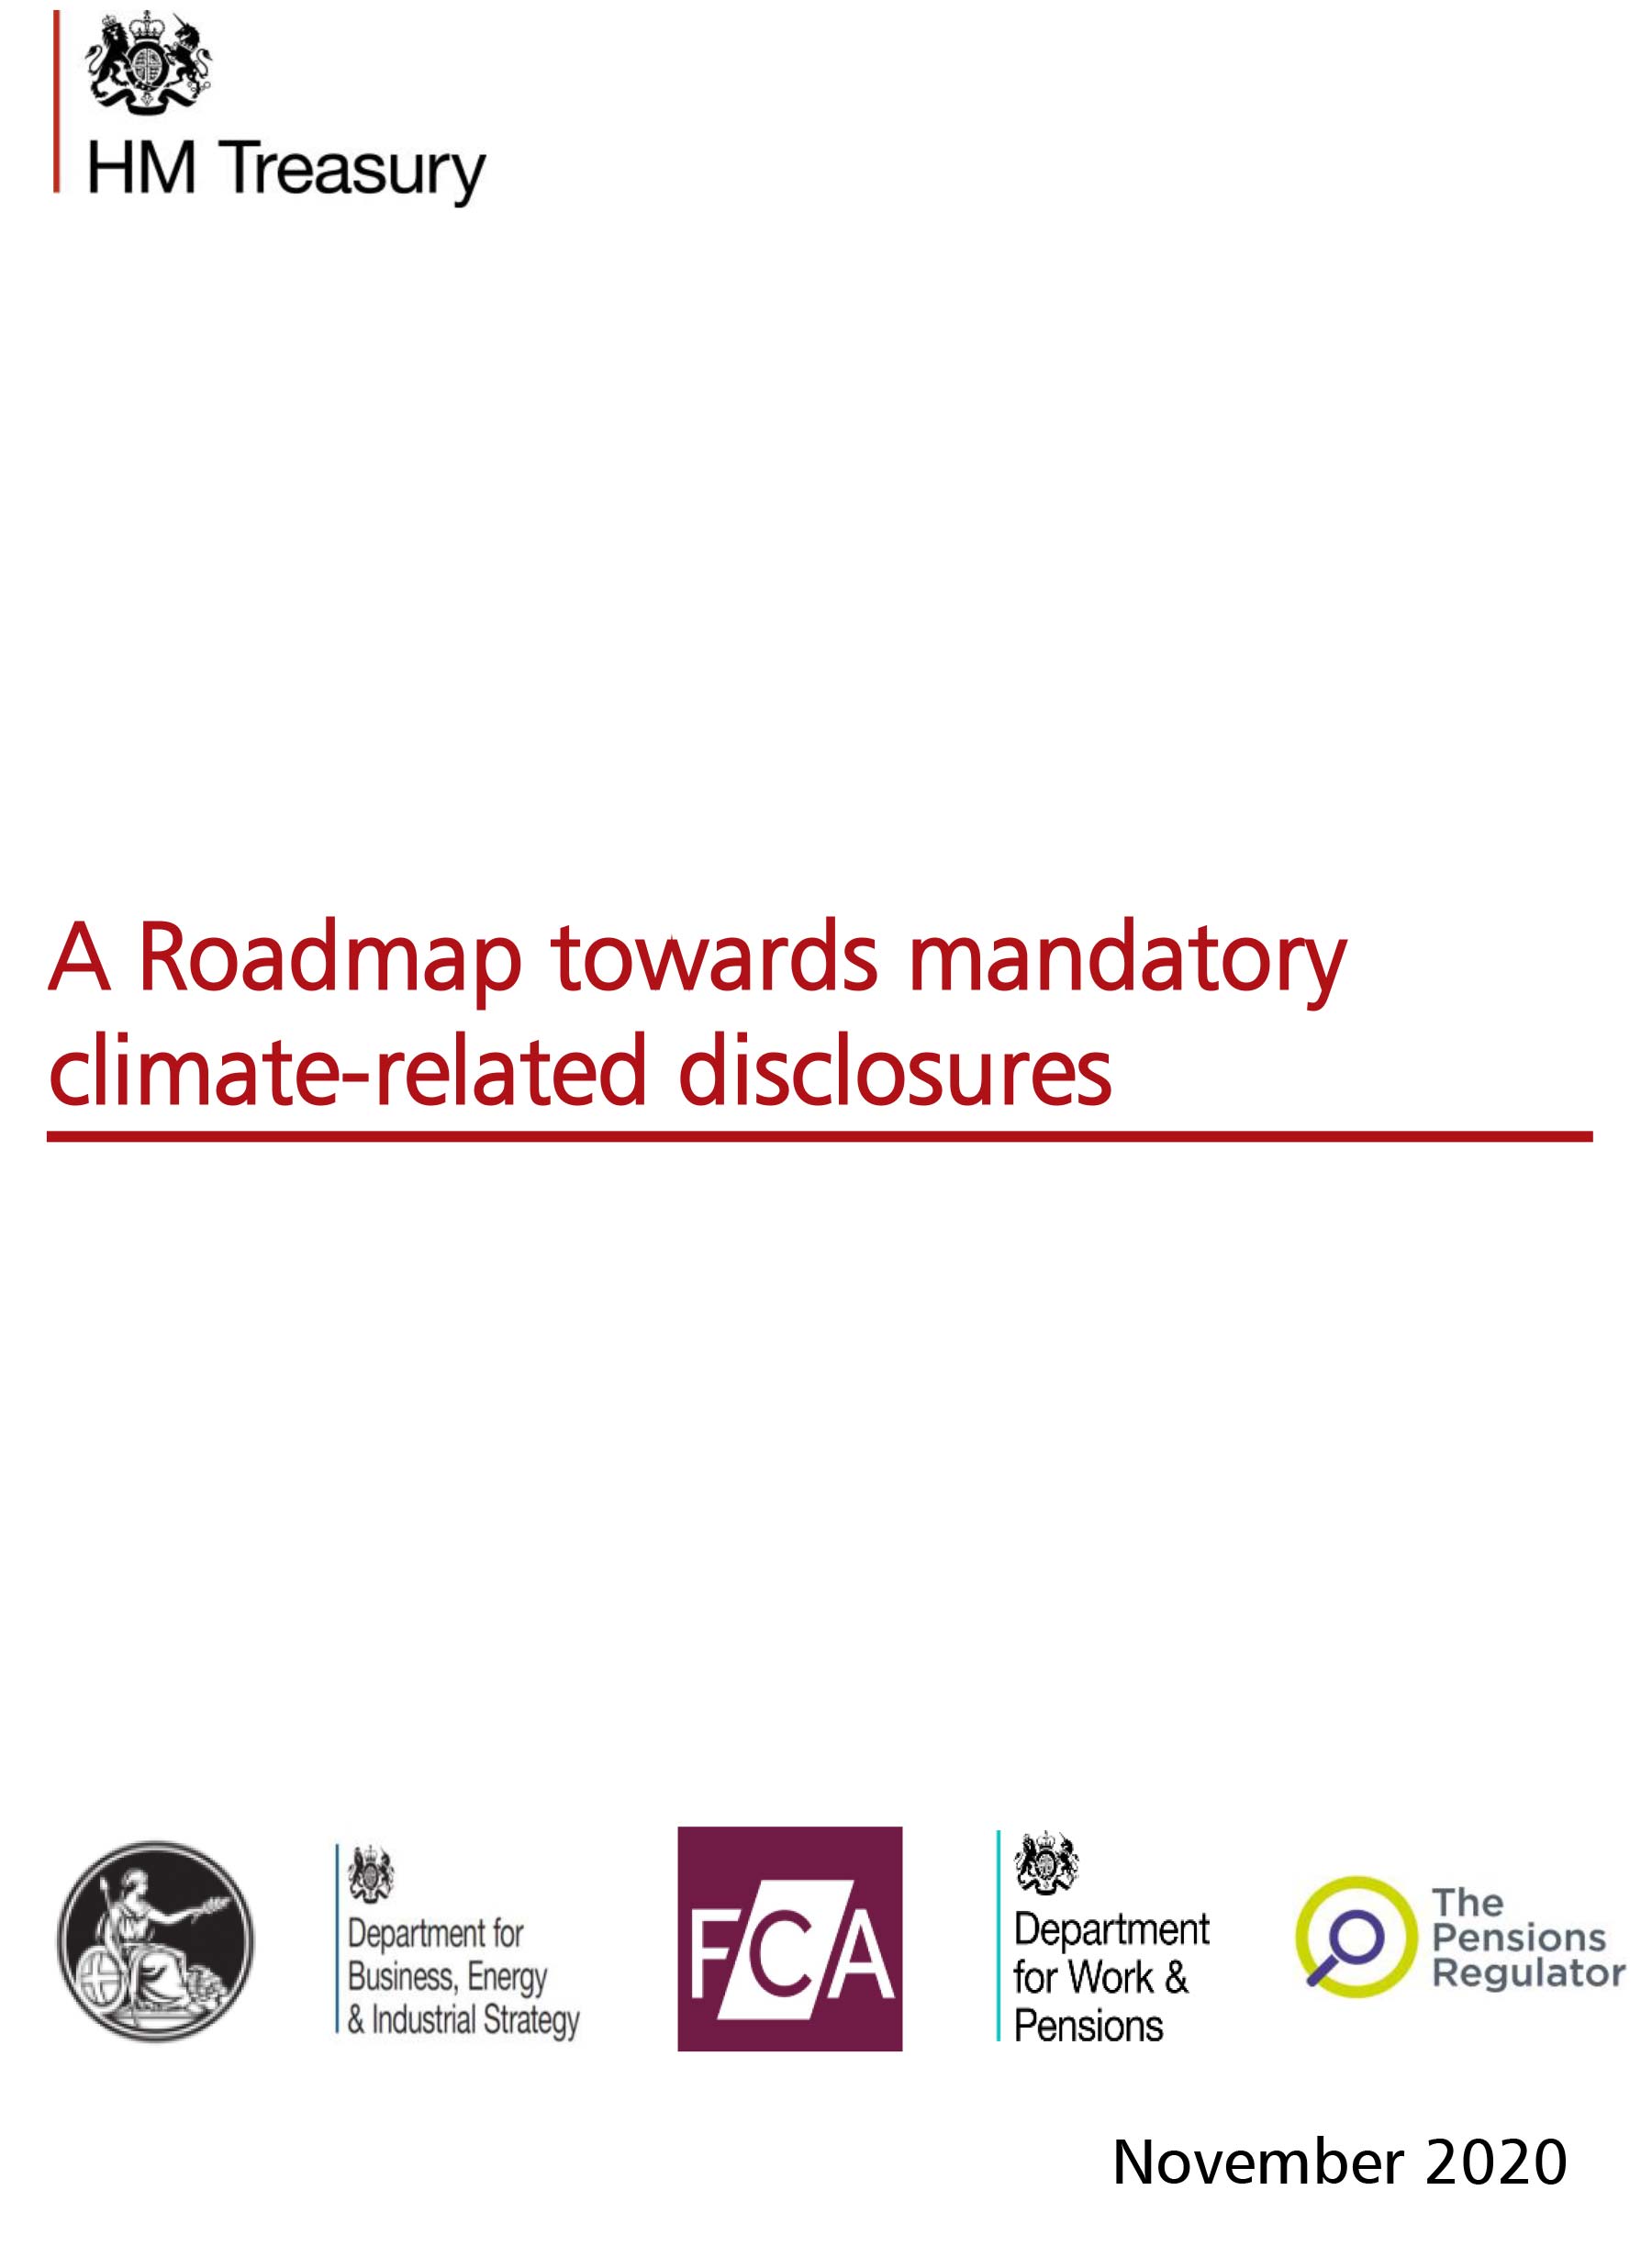 HM_Treasury_Roadmap_Towards_Mandatory_Climate-Related_Disclosures